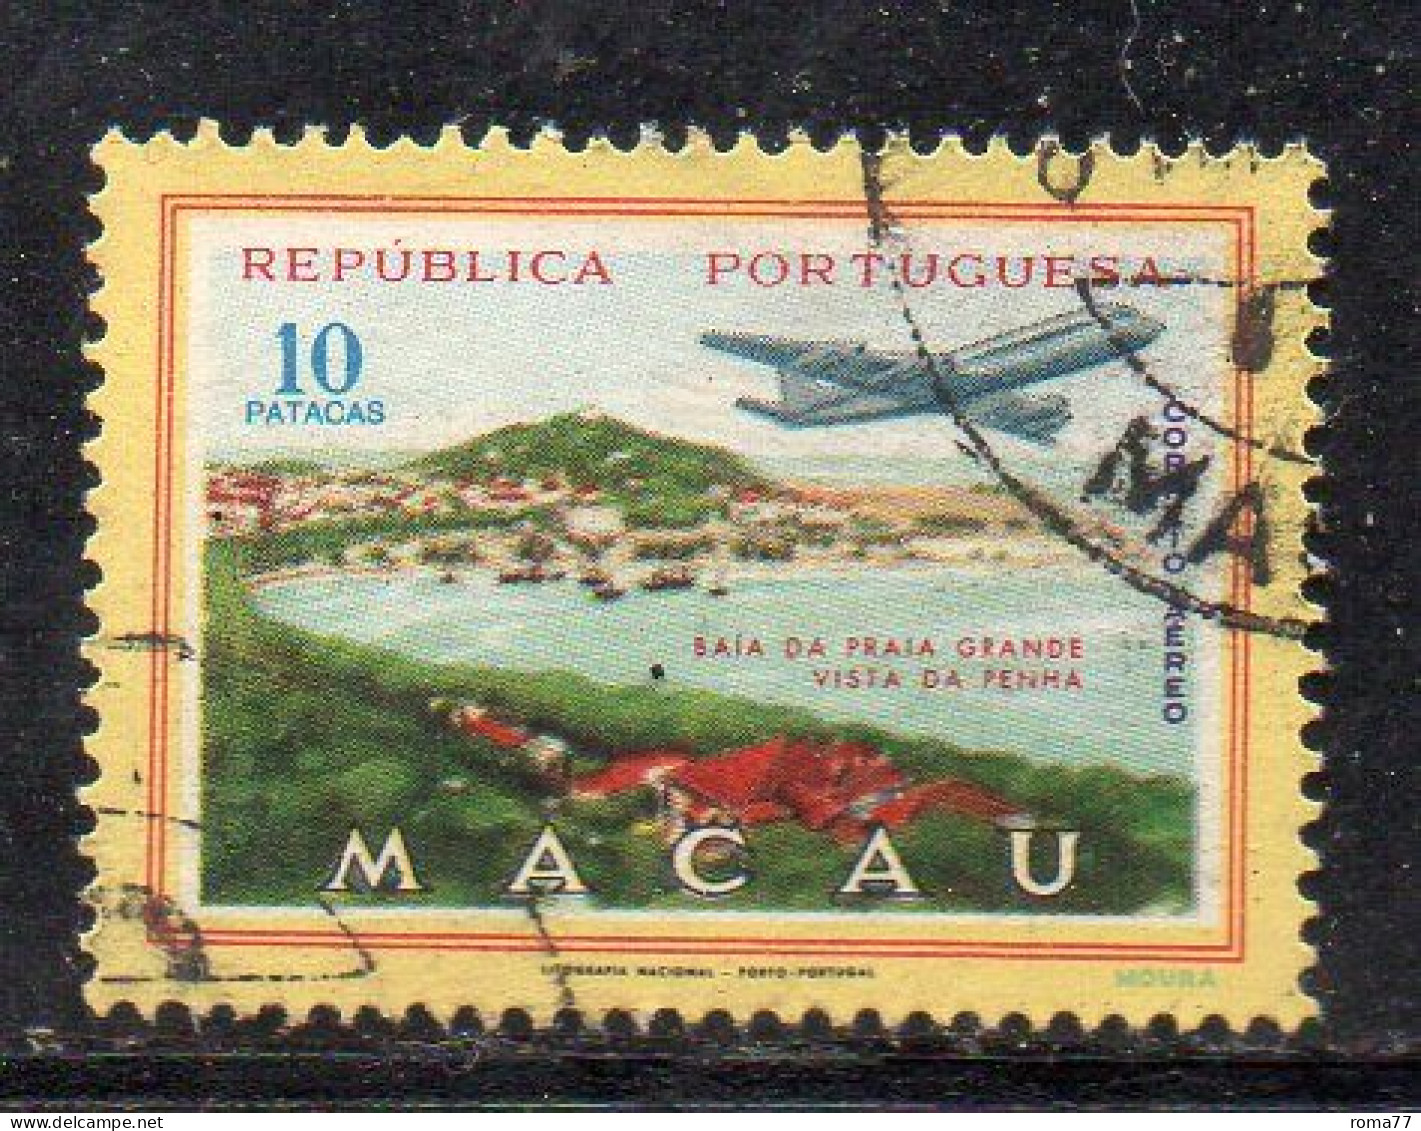 MONK306 - MACAU MACAO , Posta Aerea Il 10 Patacas Usato - Airmail